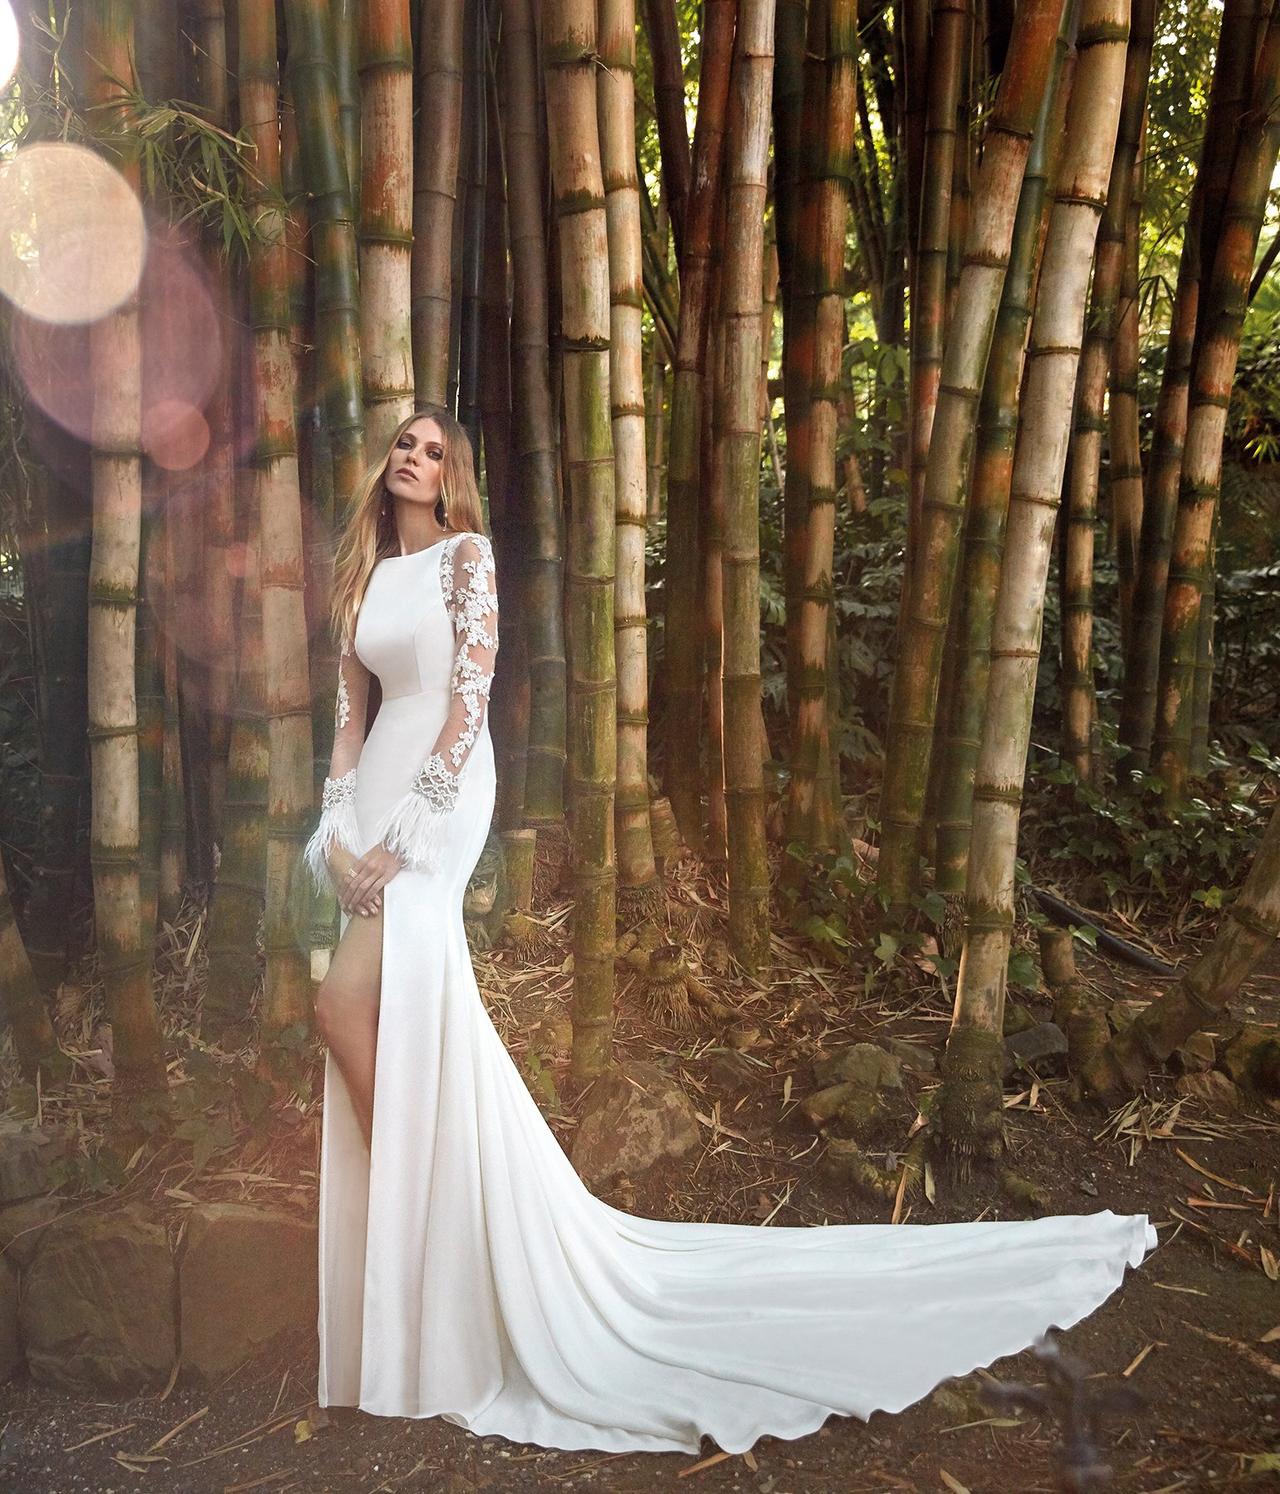 100 vestidos de novia con manga larga: ¡amor a primera vista!